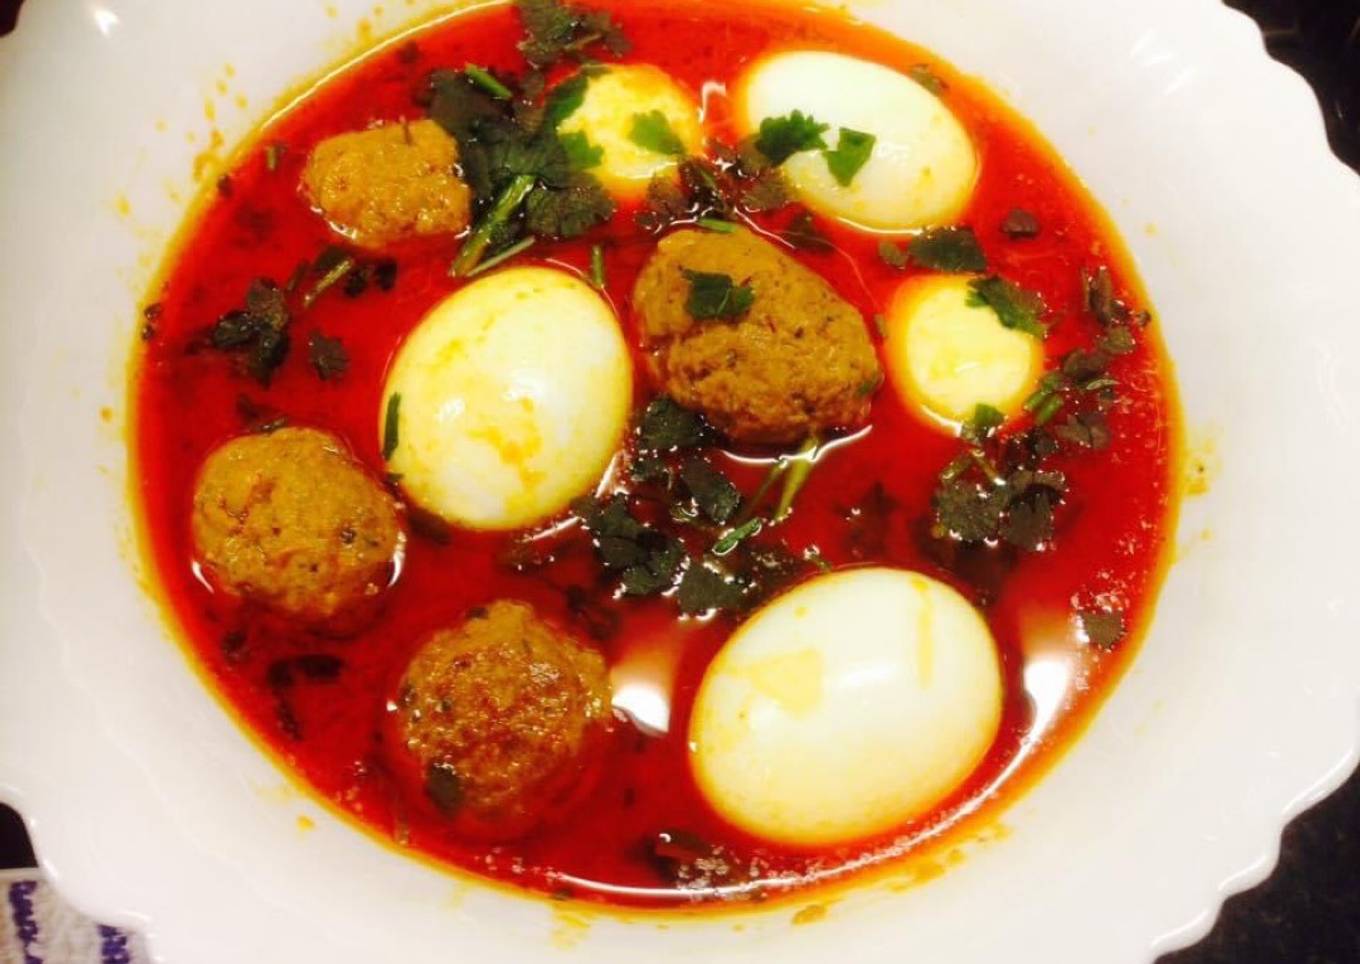 Egg and Meatballs curry: (Ande aur Kofte ki Curry)